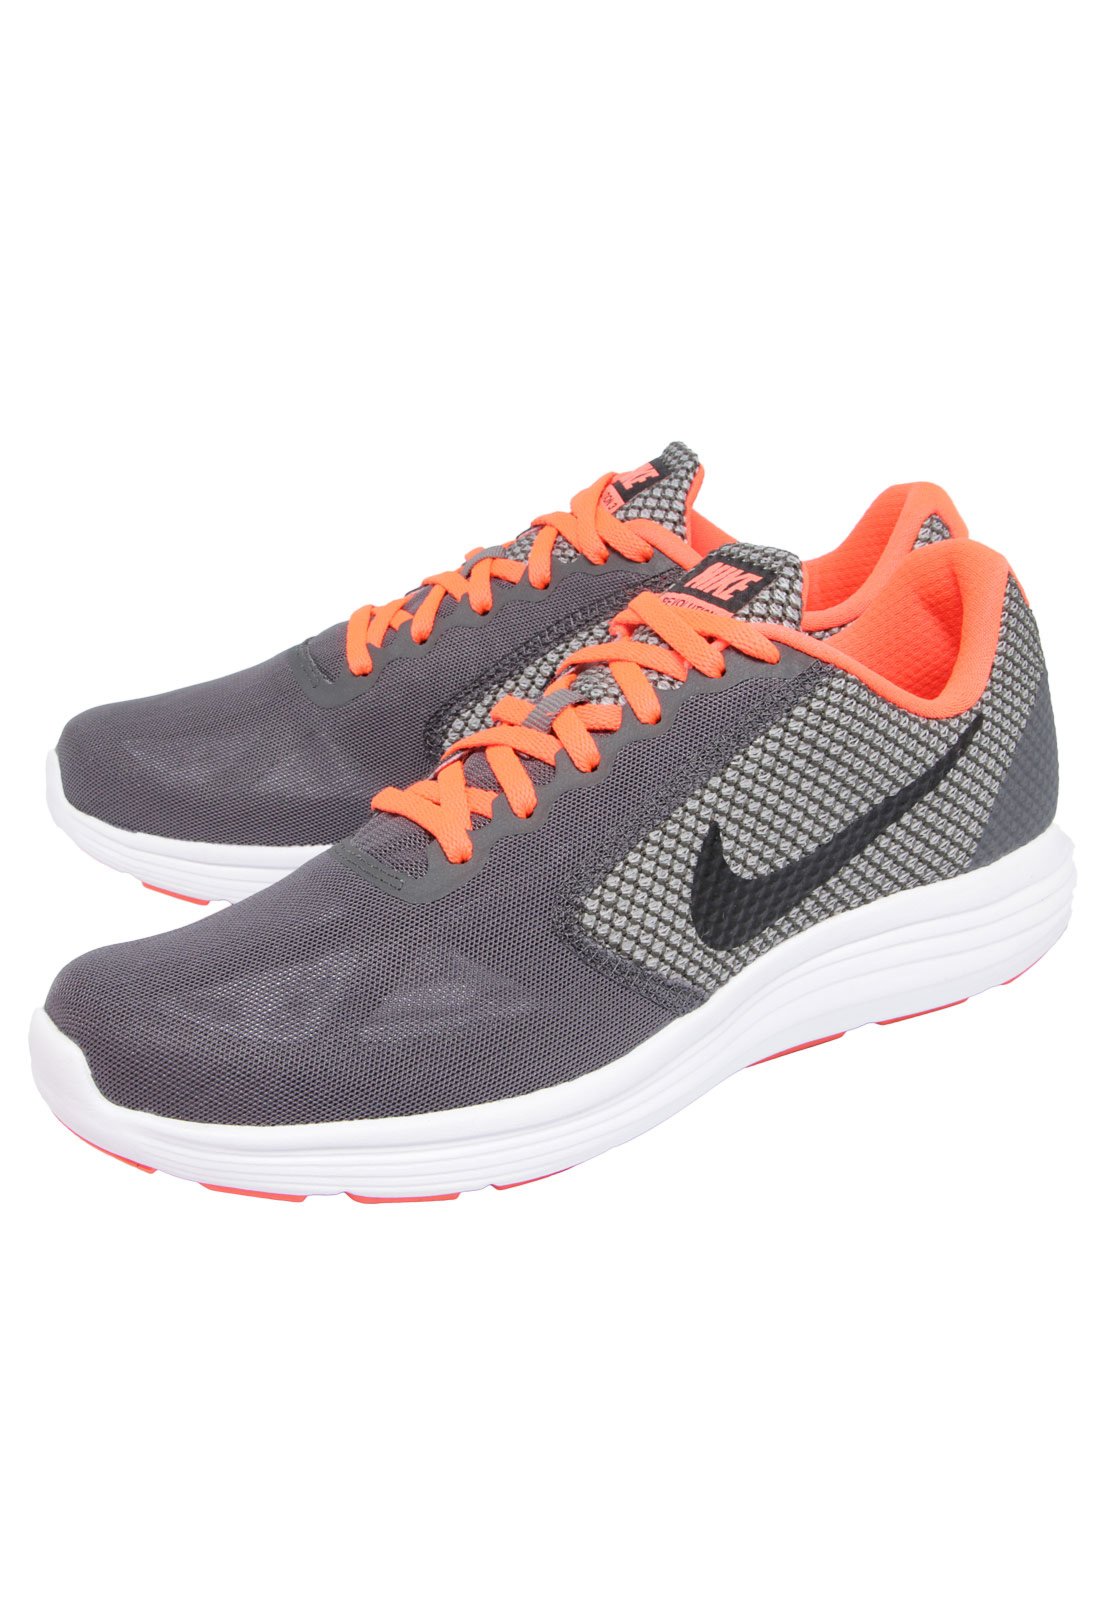 Tênis Nike Revolution 3 Cinza/Laranja - Compre Agora